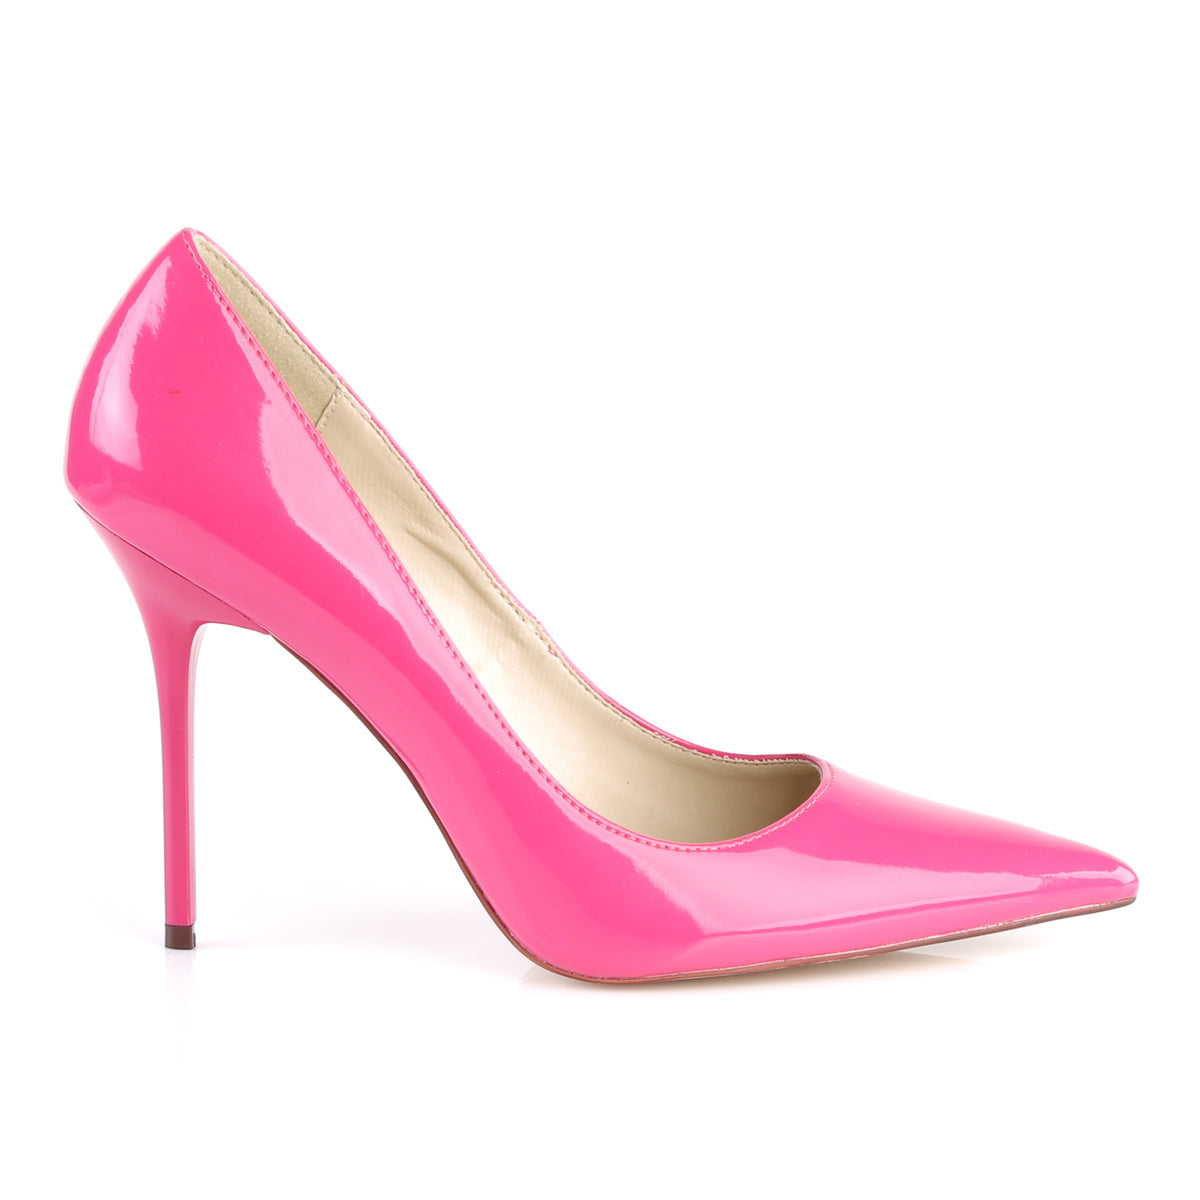 CLASSIQUE-20 Pleaser 4" Heel Hot Pink Patent Fetish Footwear-Pleaser- Sexy Shoes Fetish Heels